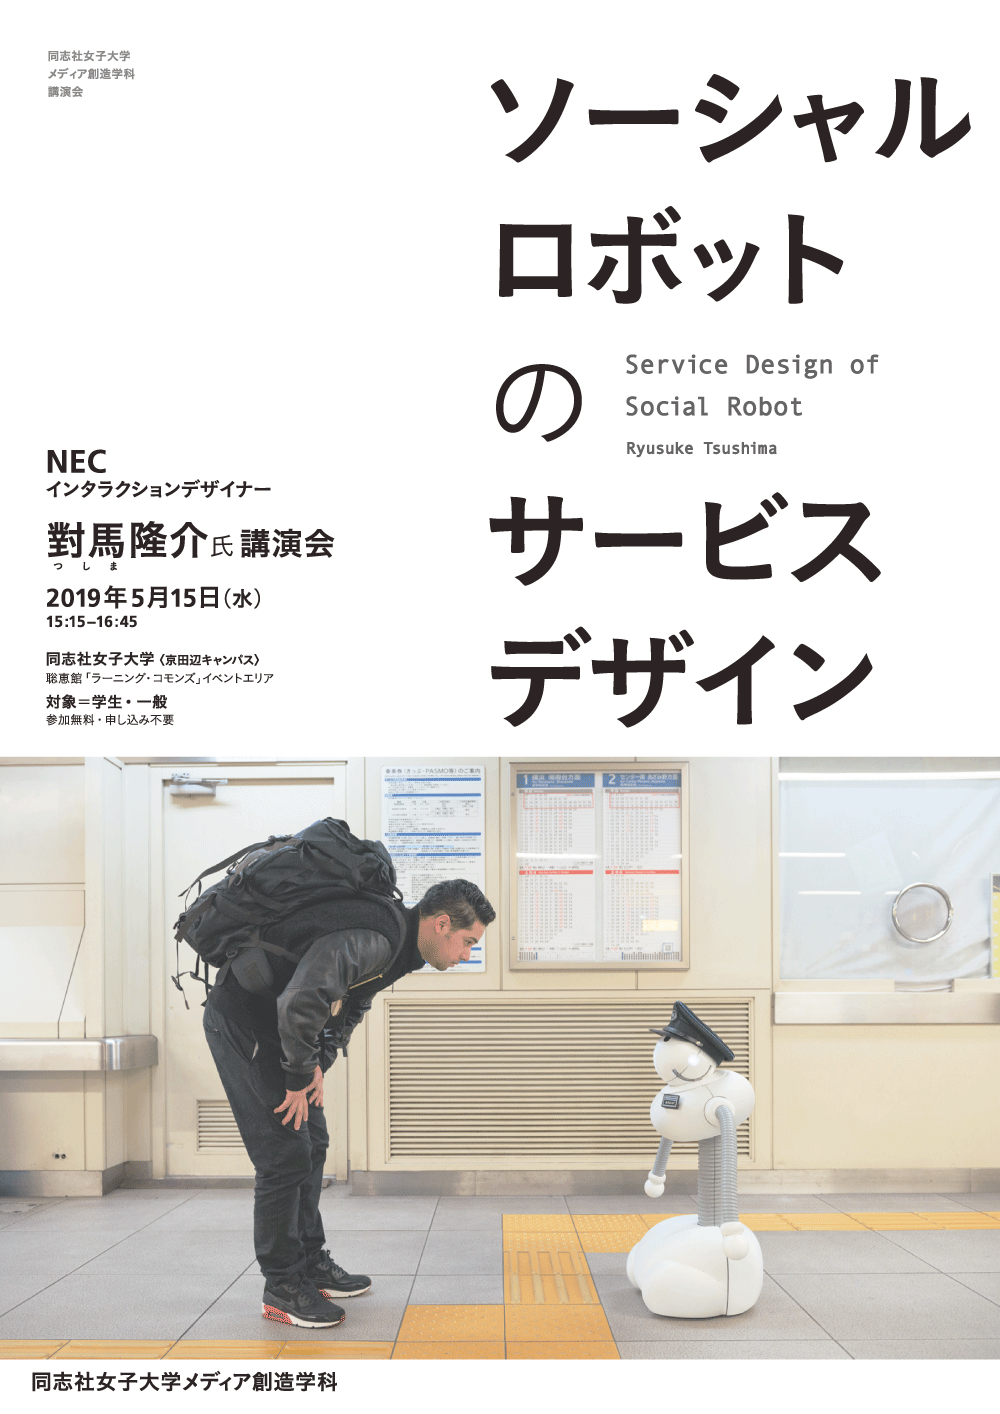 NECインタラクションデザイナー對馬隆介氏講演会「ソーシャル ロボットのサービス デザイン」